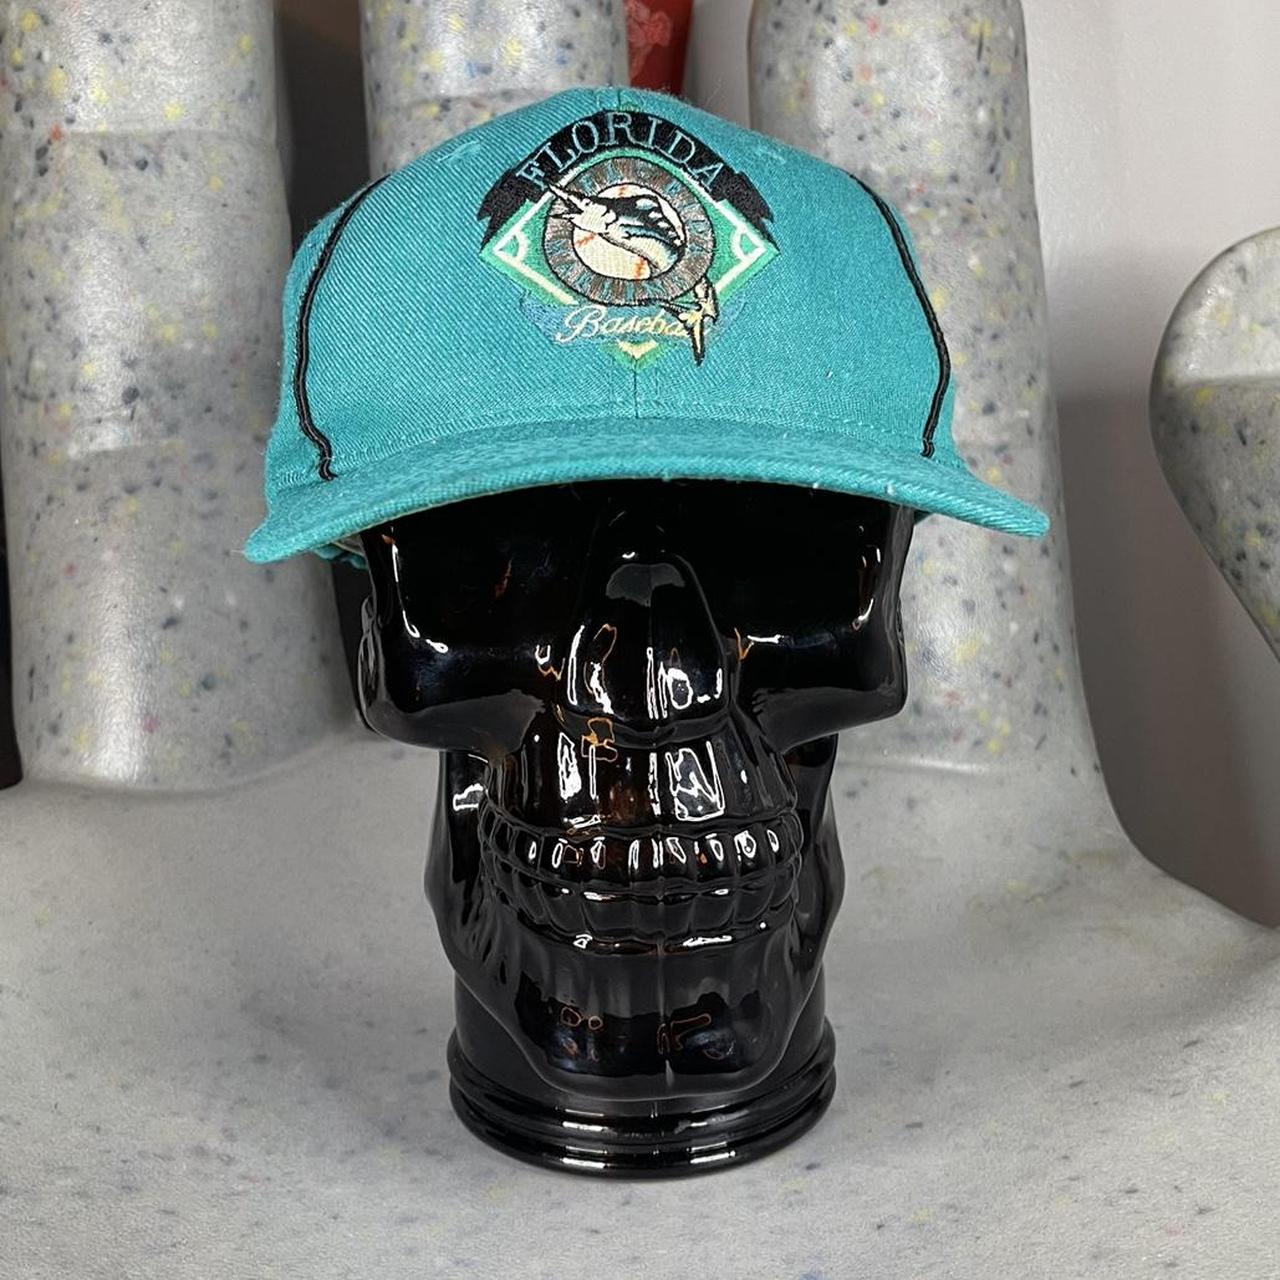 Product Image 1 - 90s Florida Marlins Hat VINTAGE

Size/fitting: